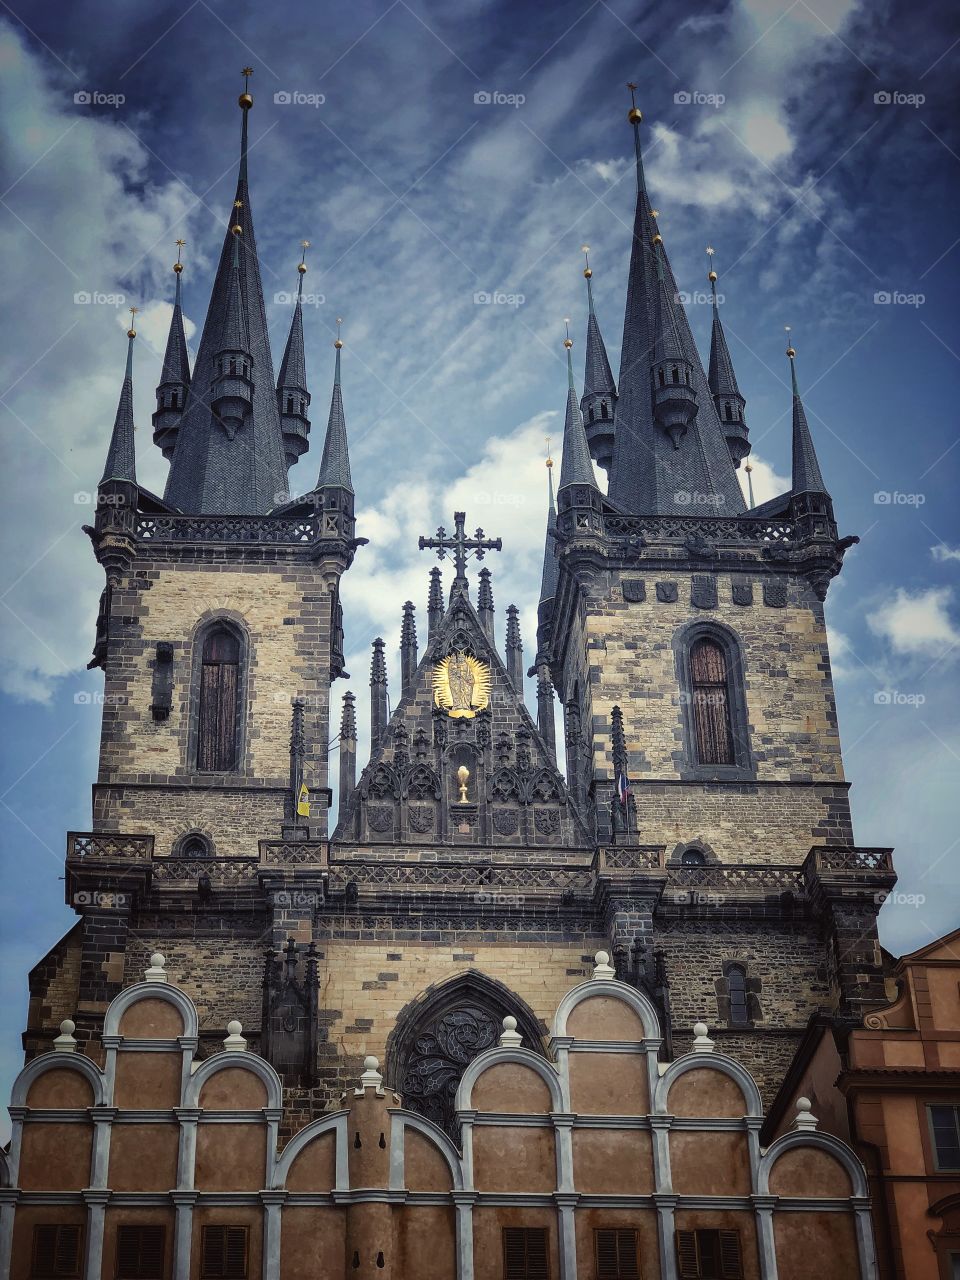 Tyn's church in Prague